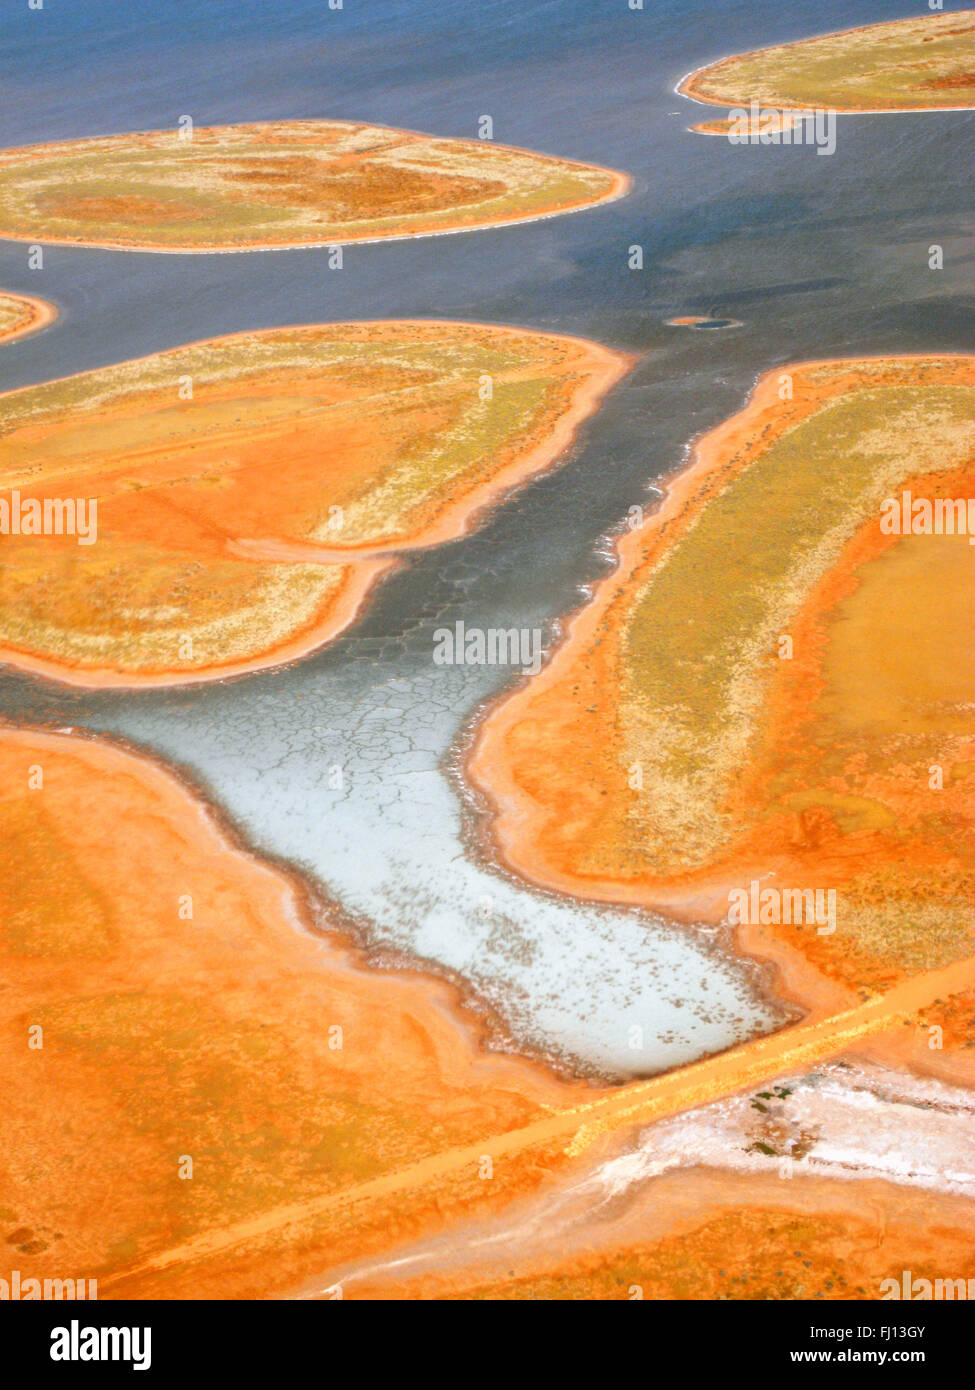 Aerial view of orange soil and salt lakes near Onslow, Pilbara region, Western Australia Stock Photo